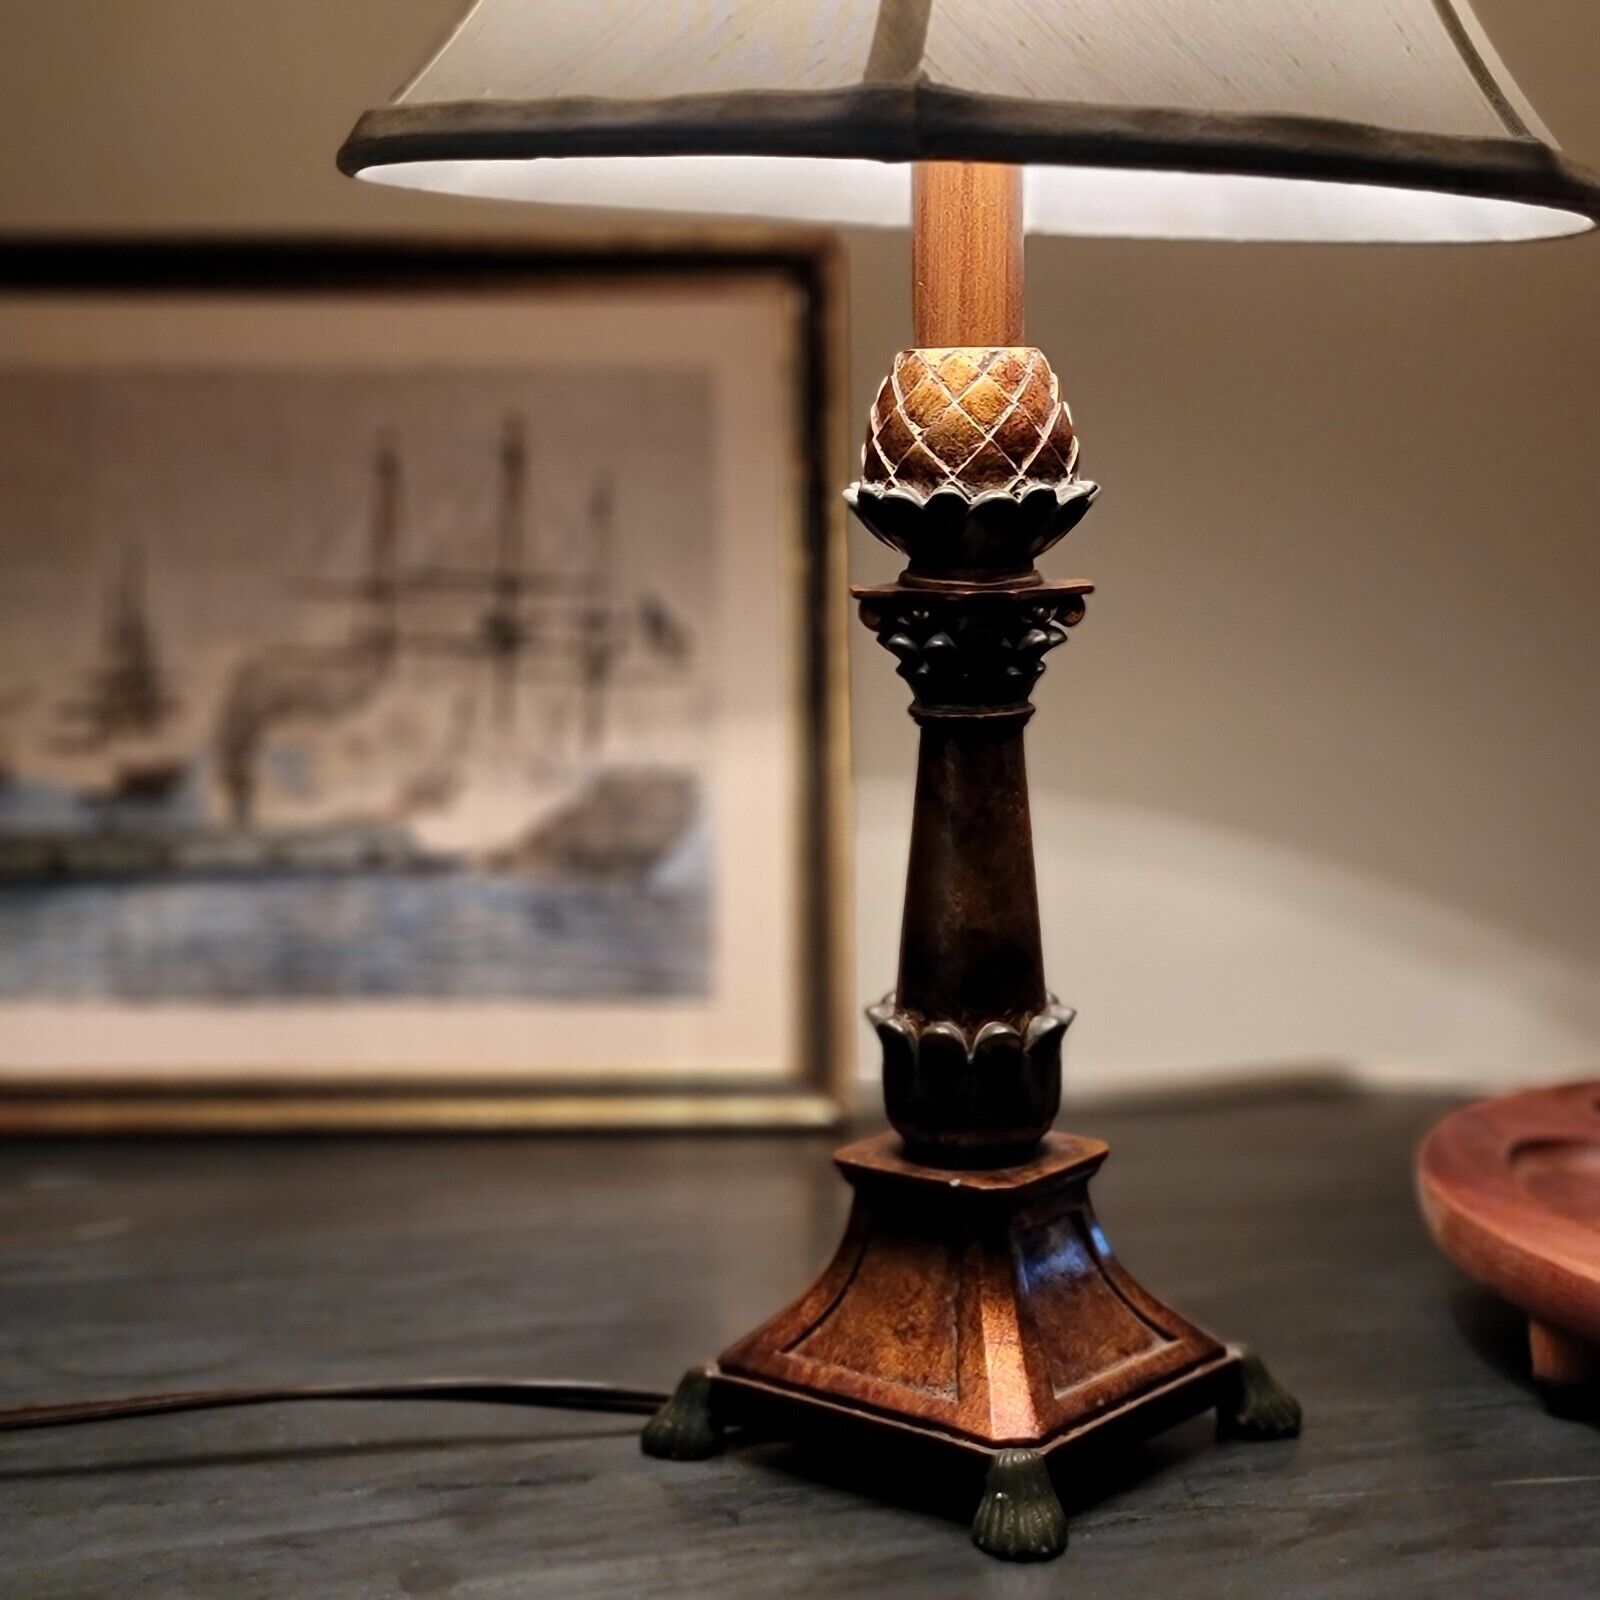 Pineapple Lamp Bronze Ornate Lighting Powered With Shade Home Decor Art Light